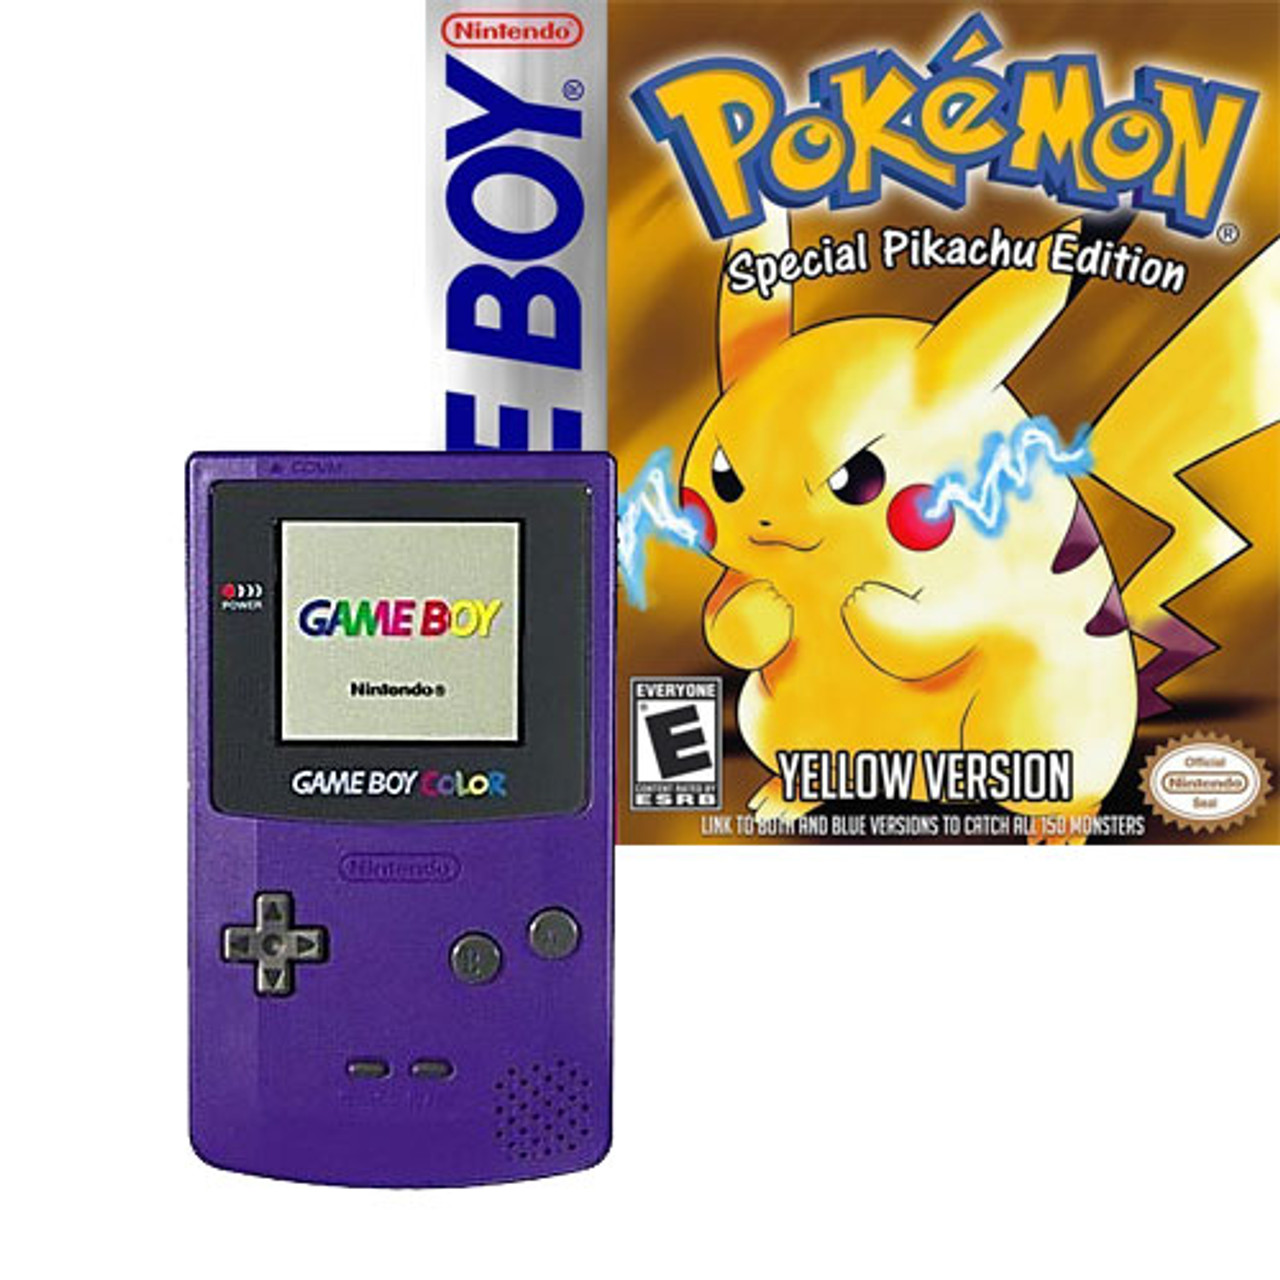 Special Pokemon Edition Nintendo Game Boy Color System